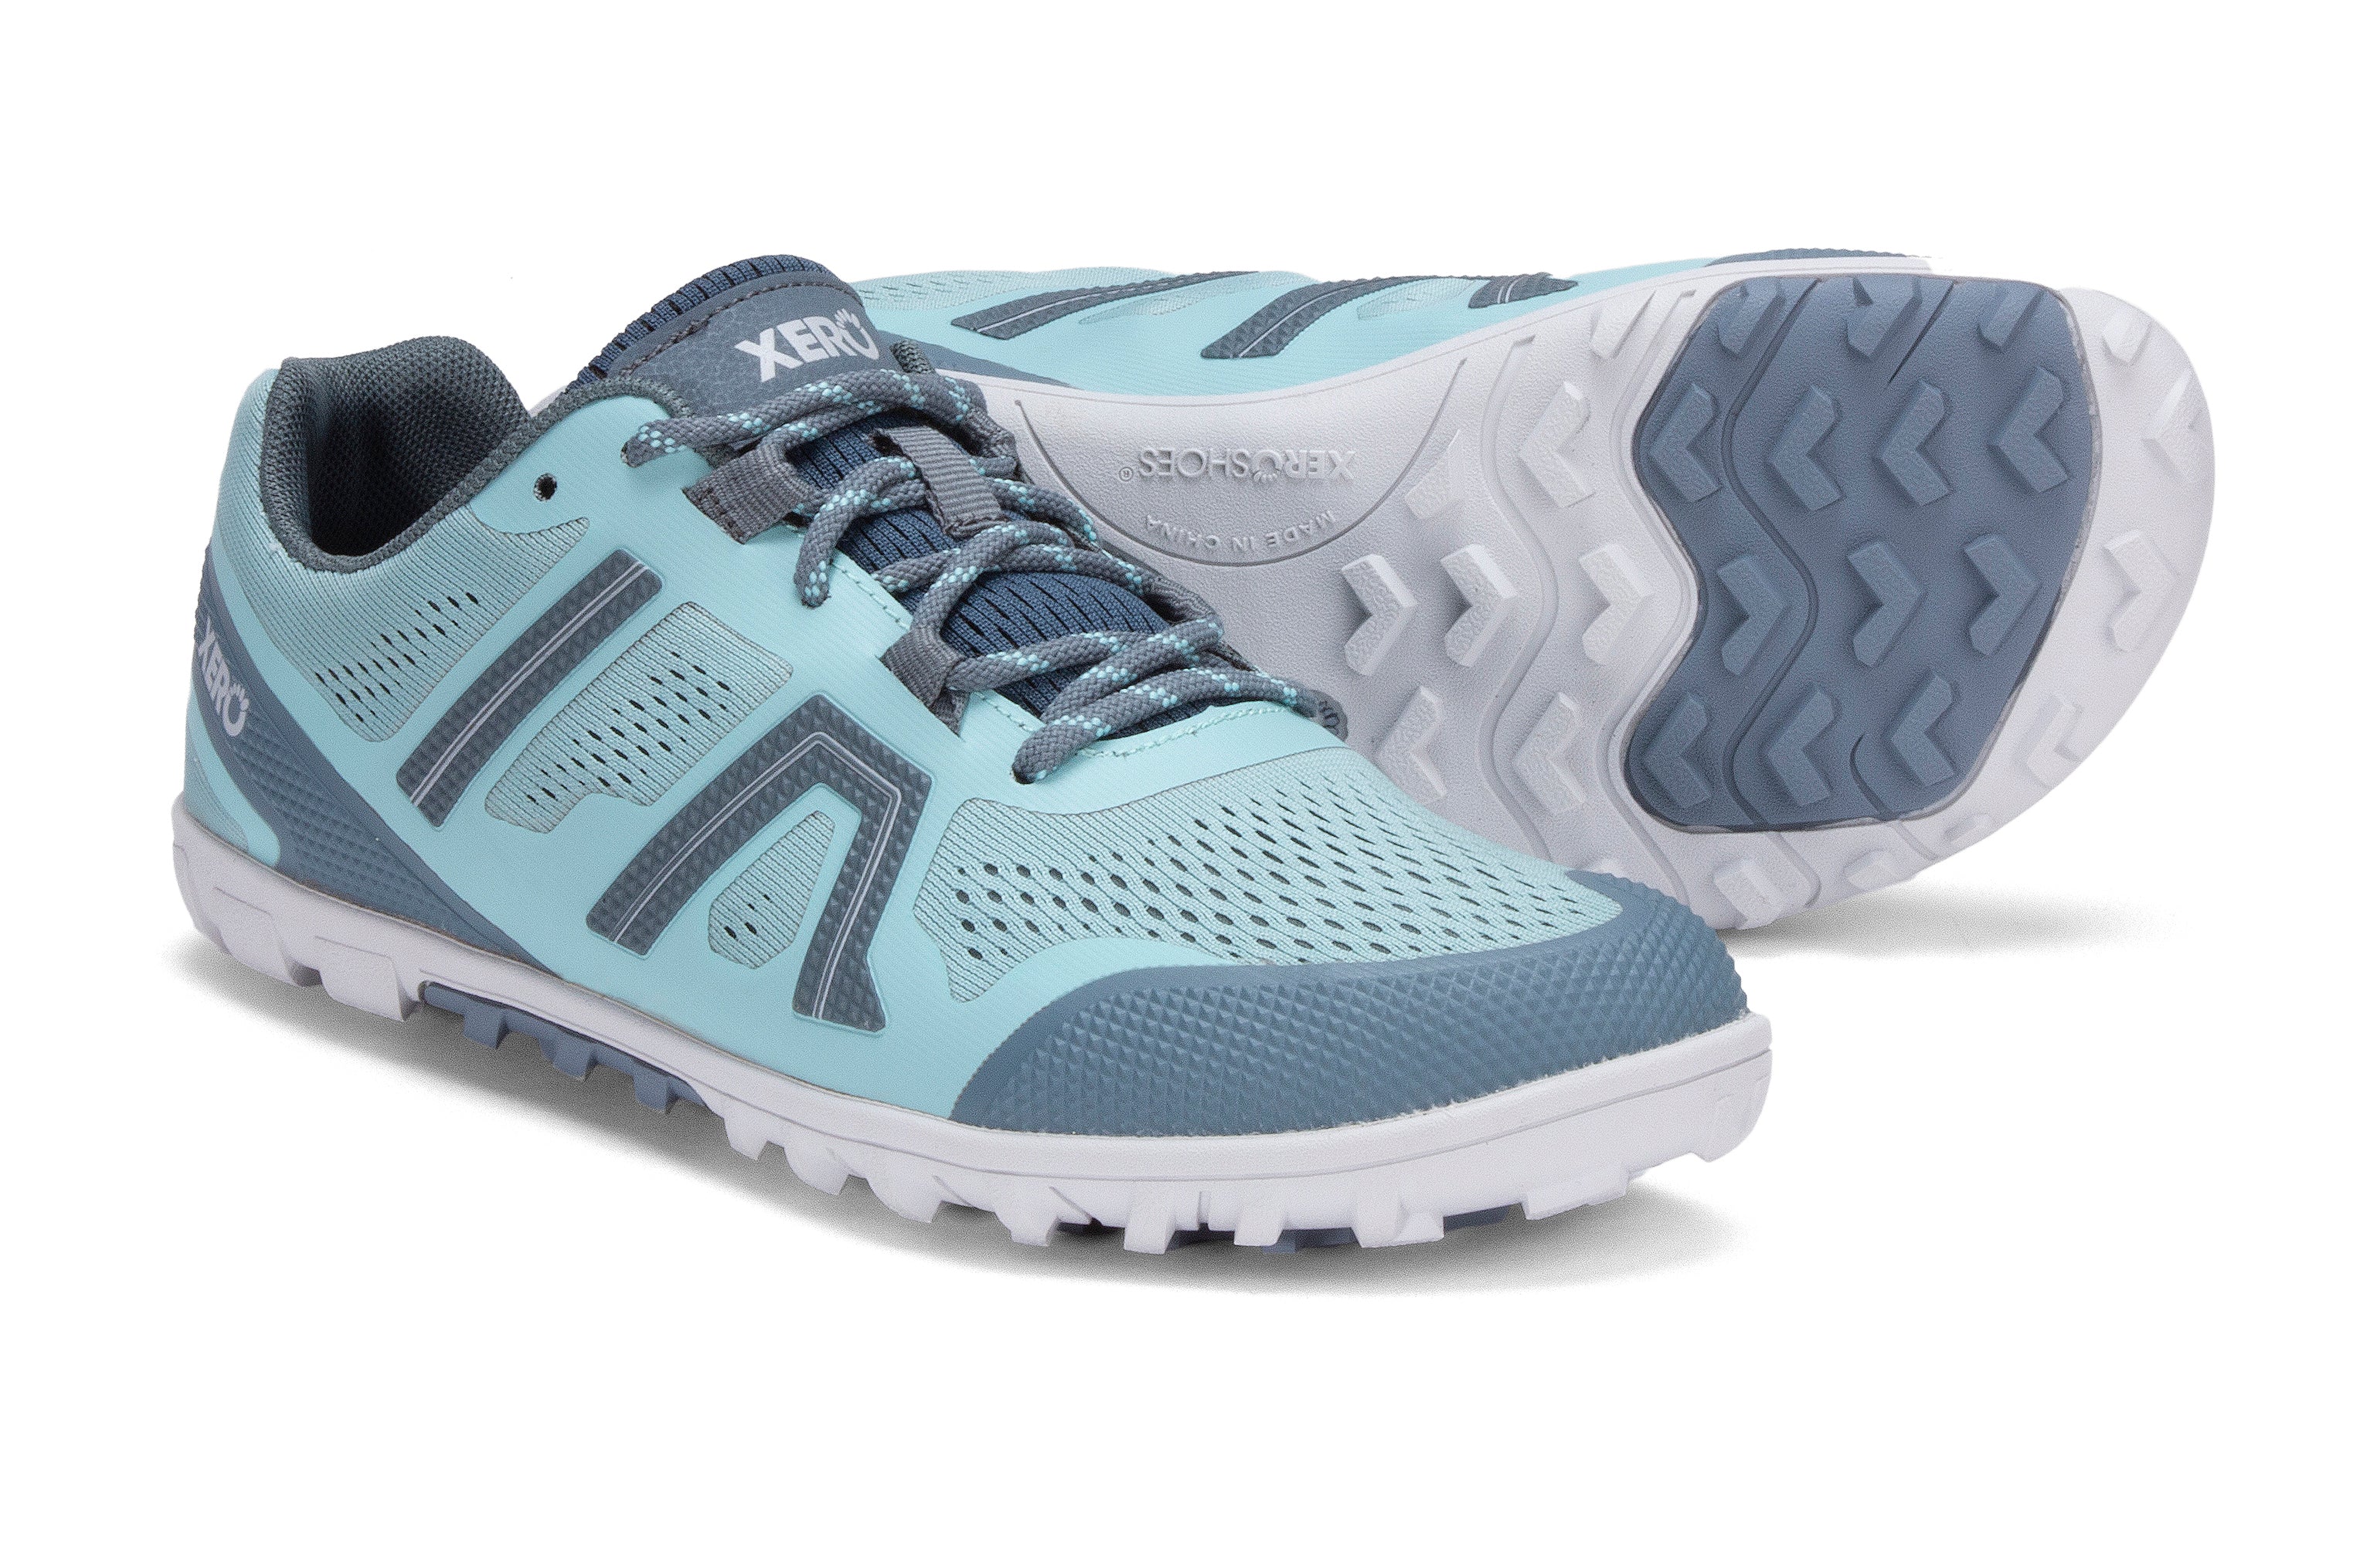 Xero Shoes Mesa Trail barfods trailsko til kvinder i farven turquoise, par